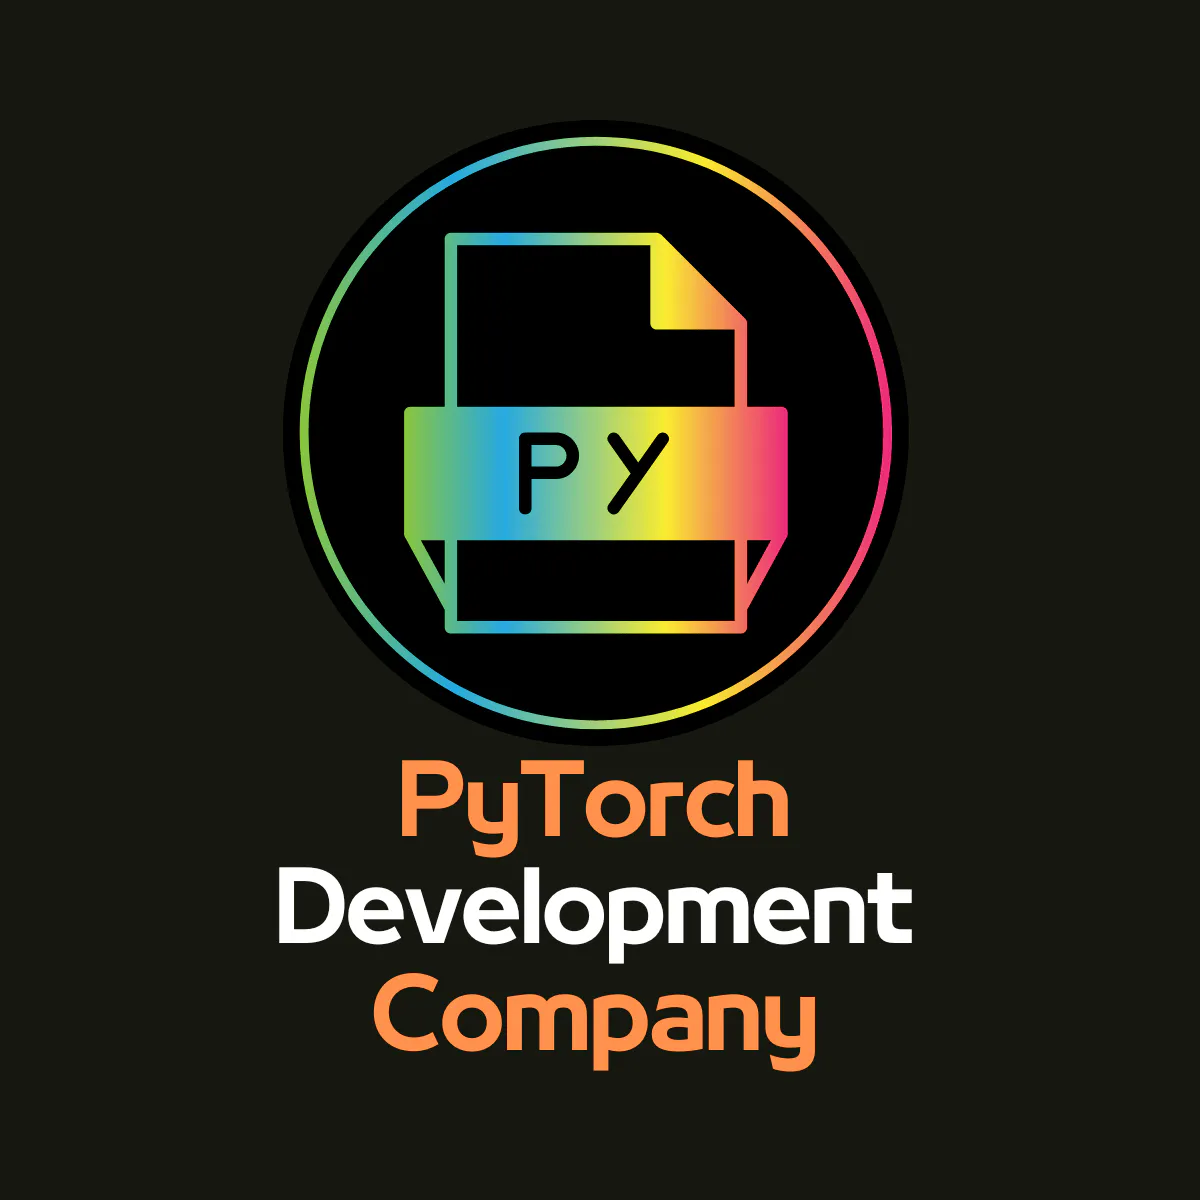 PyTorch Development